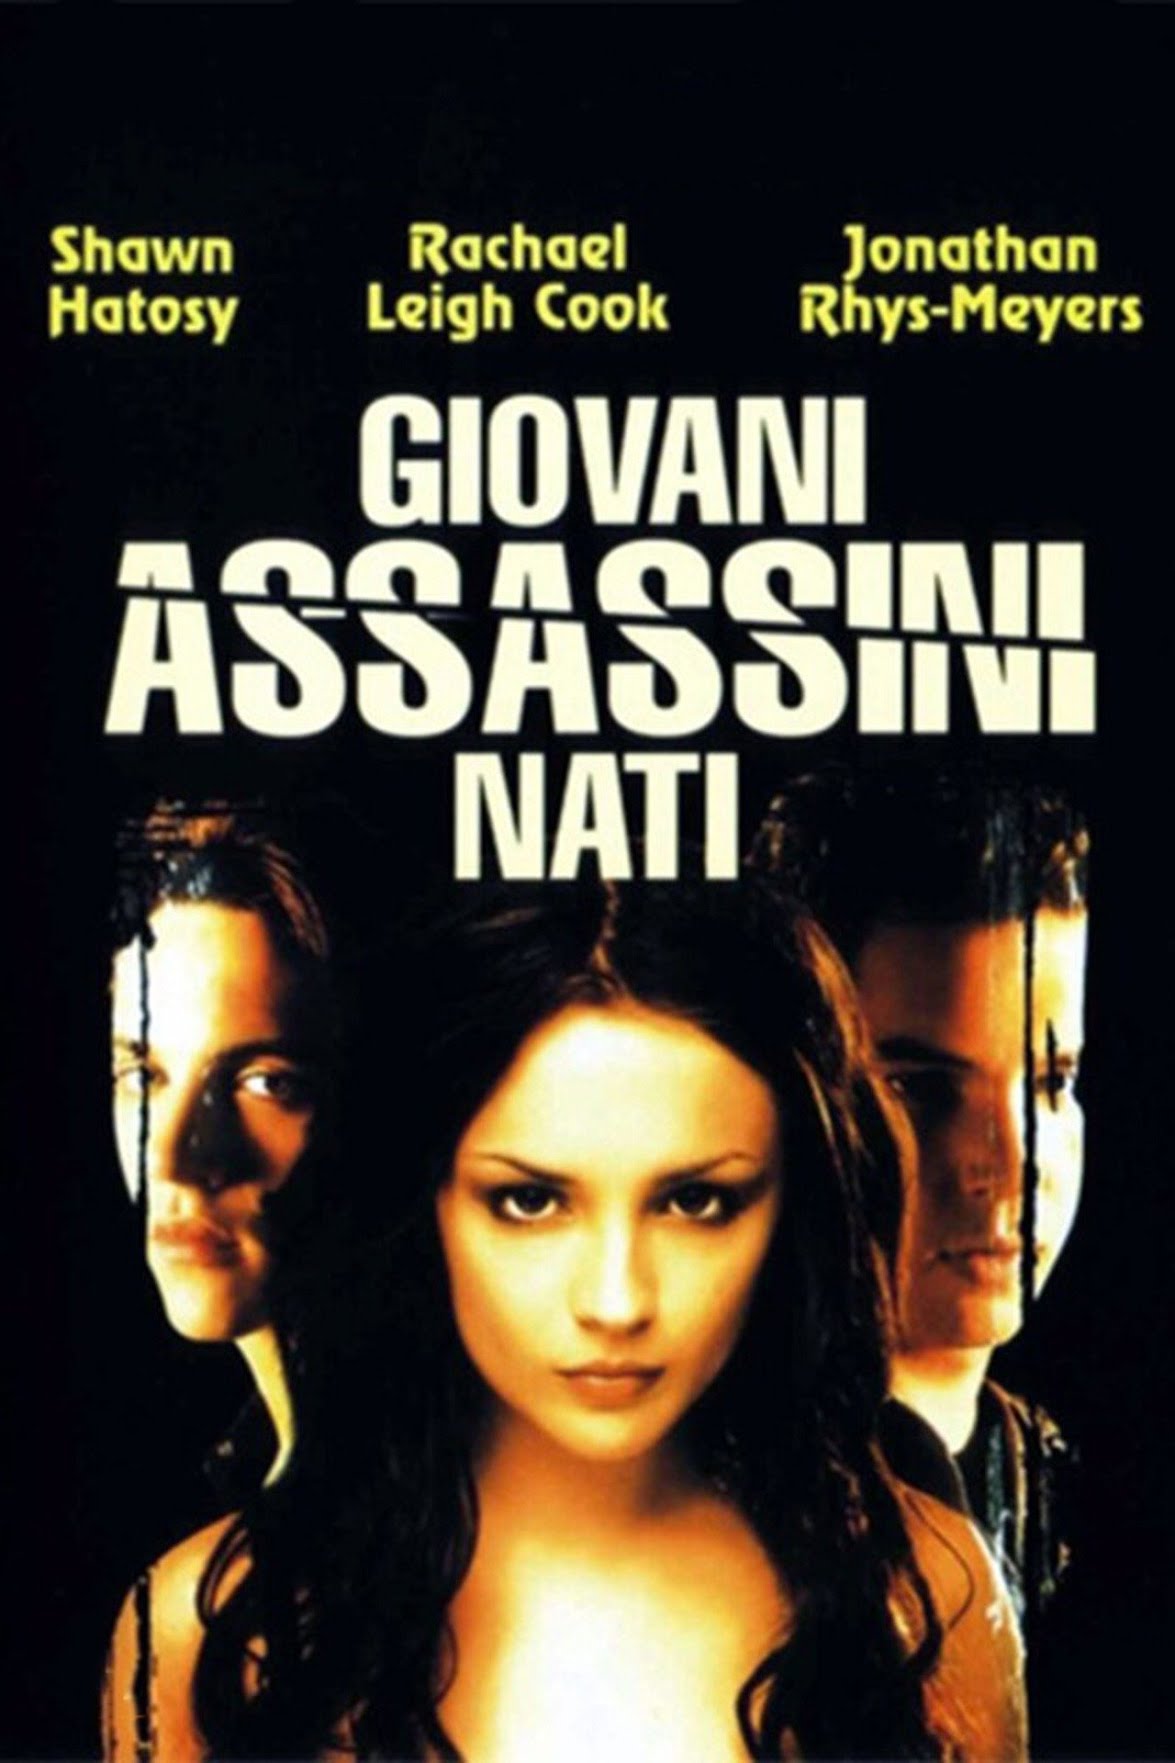 Giovani assassini nati (2001)